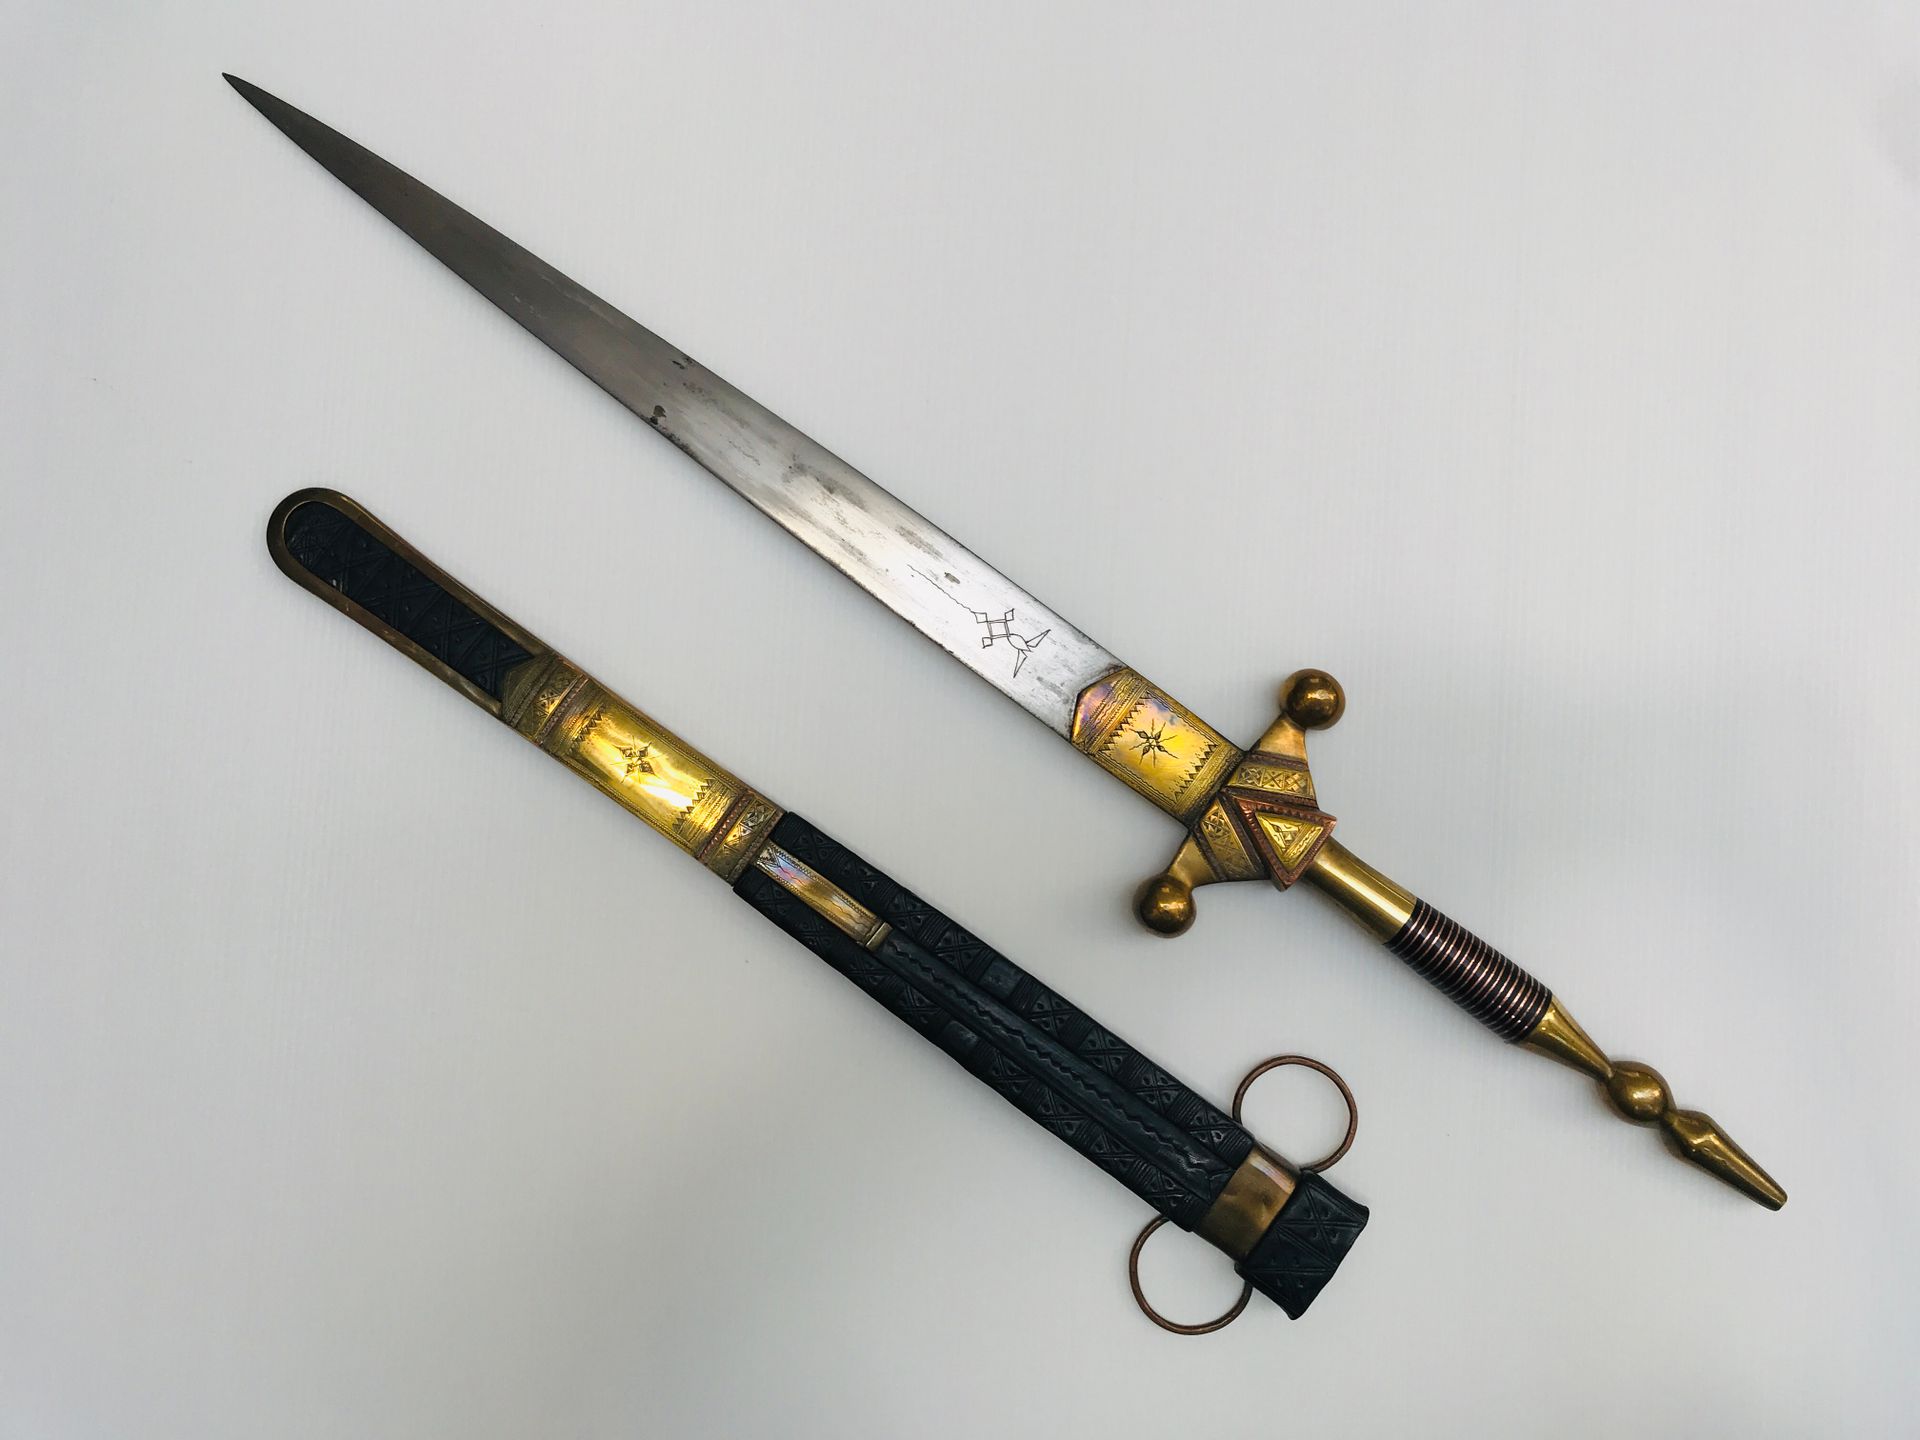 Épée touareg ottone e rame inciso, fodero in pelle

L. 77 cm